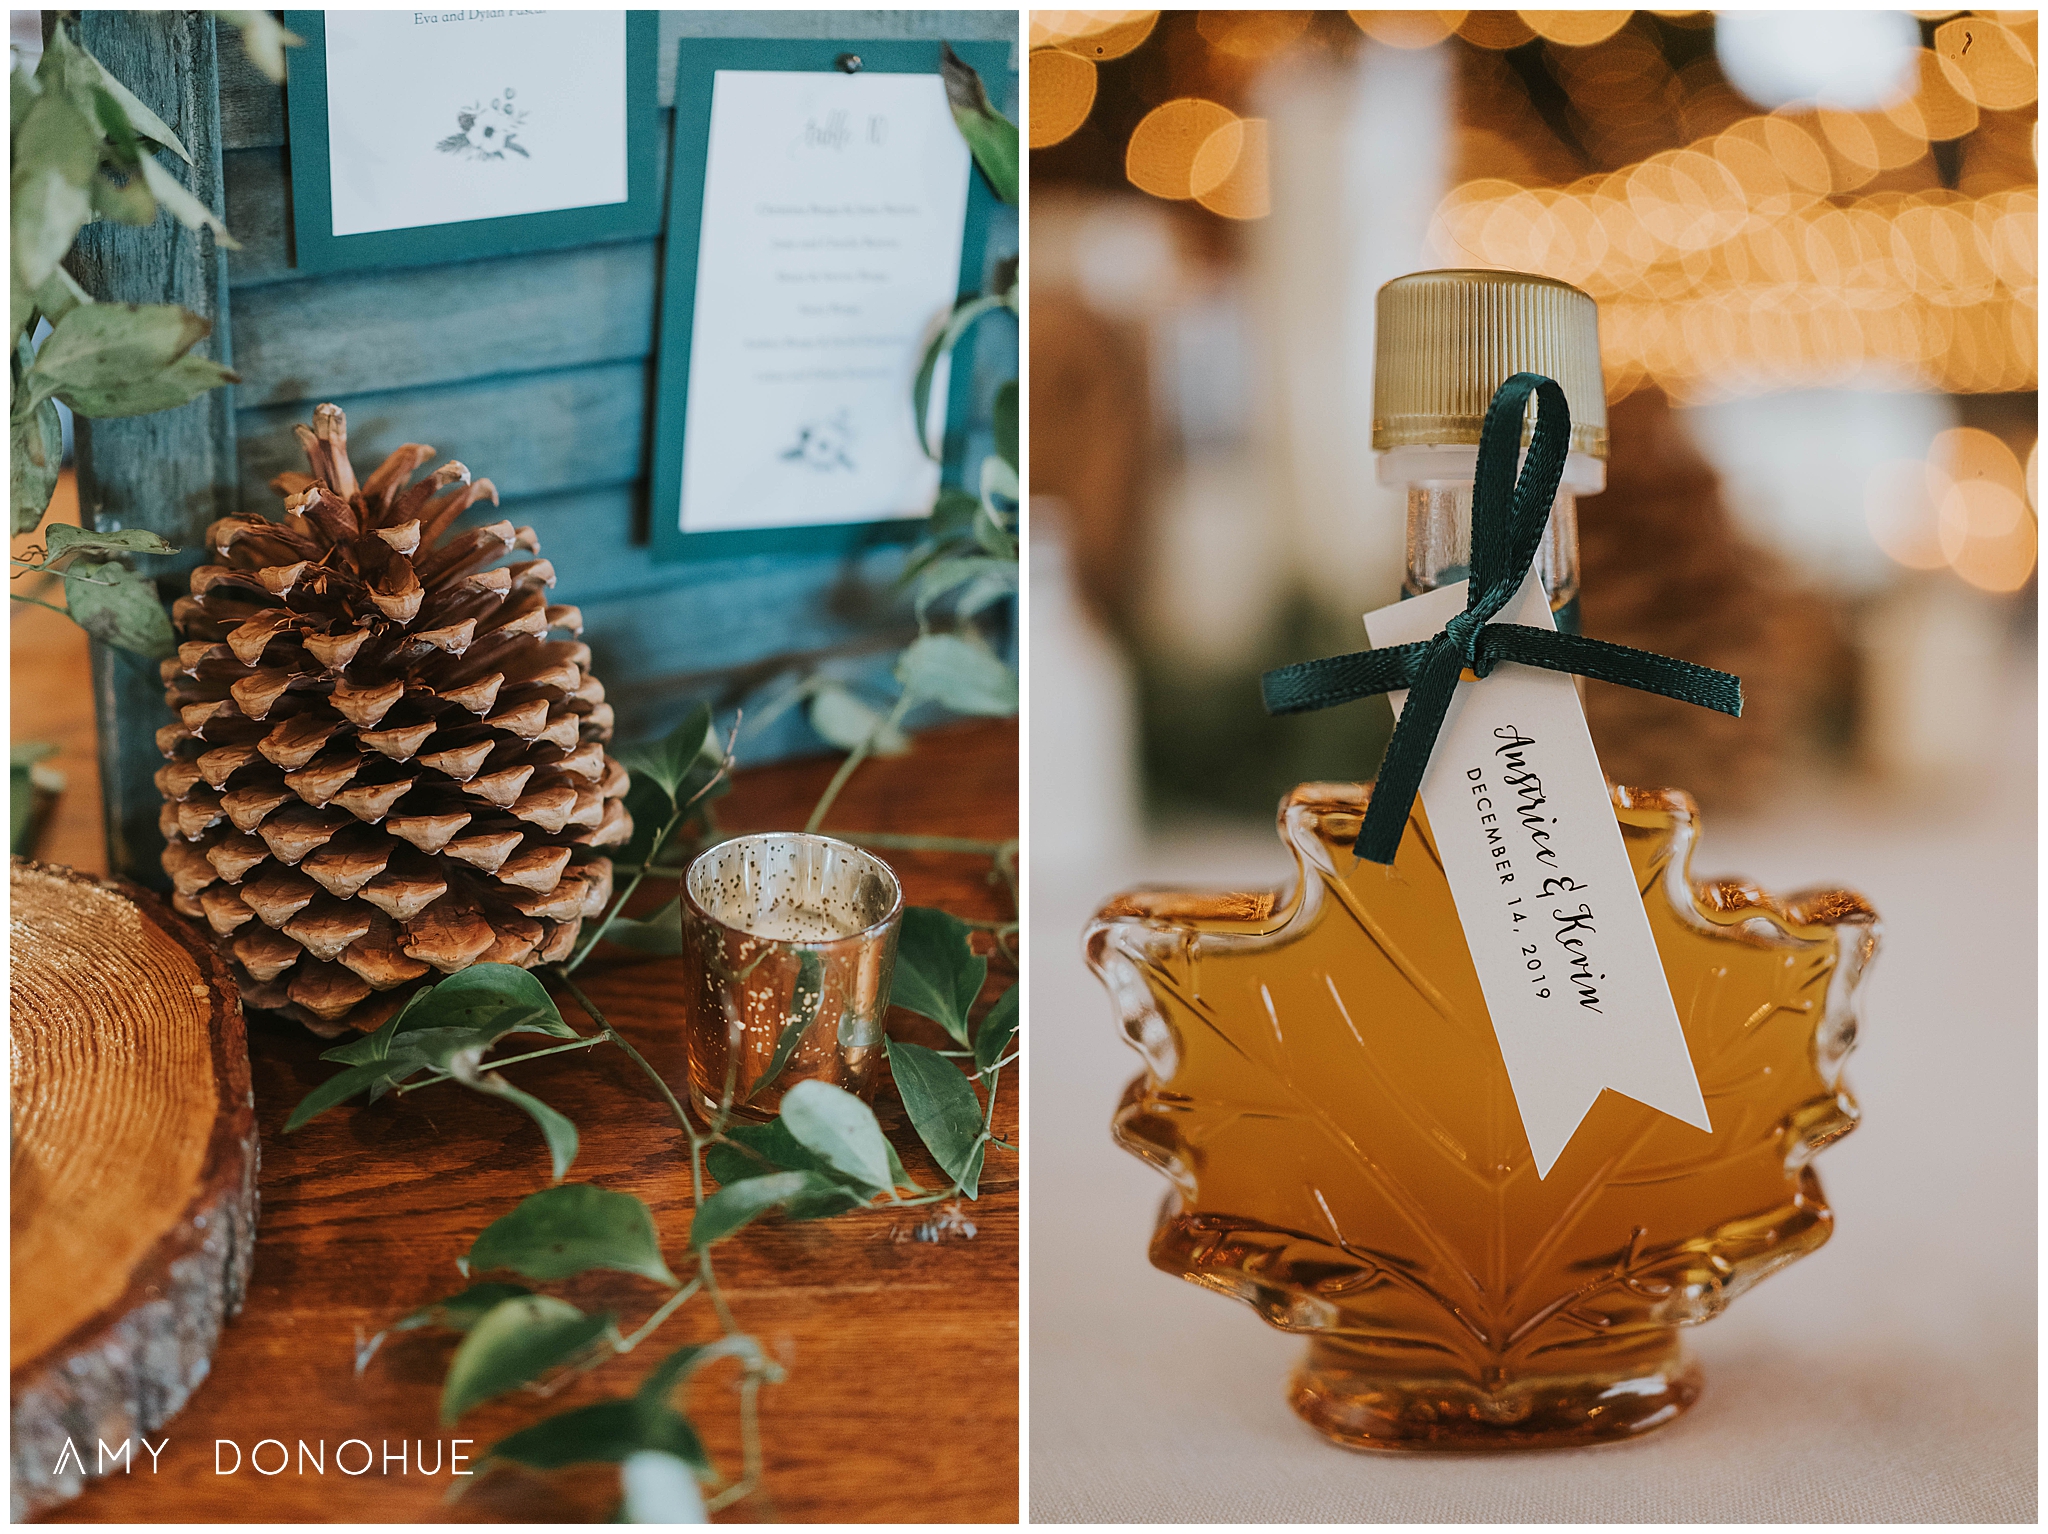 Barn Reception Details | Vermont Wedding Photographer | Mountain Top Inn Vermont | © Amy Donohue Photography